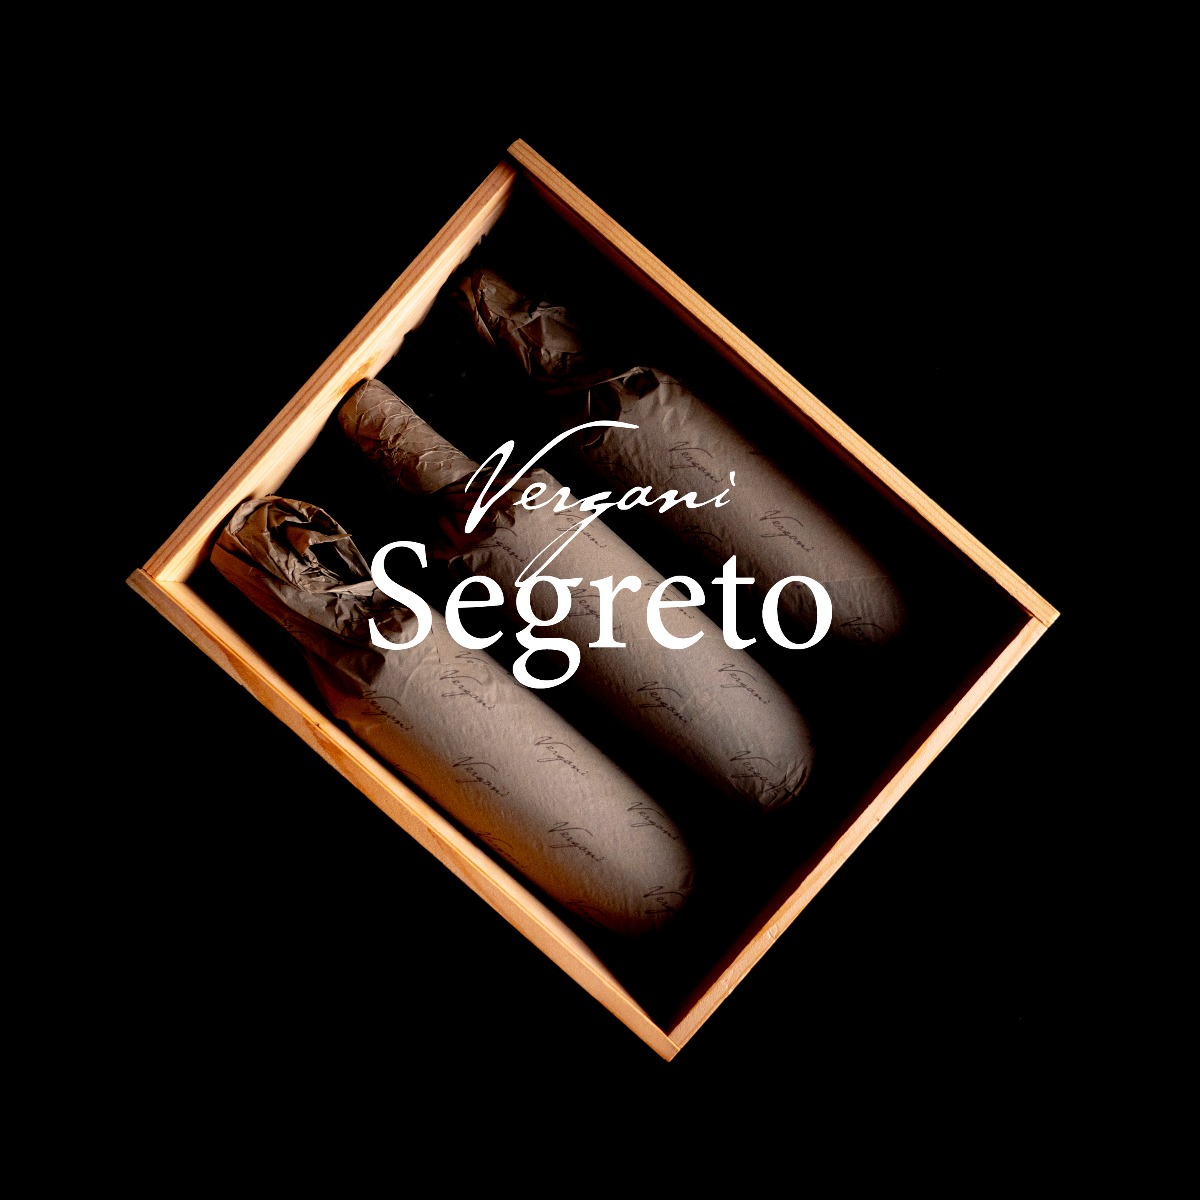 Current Segreto